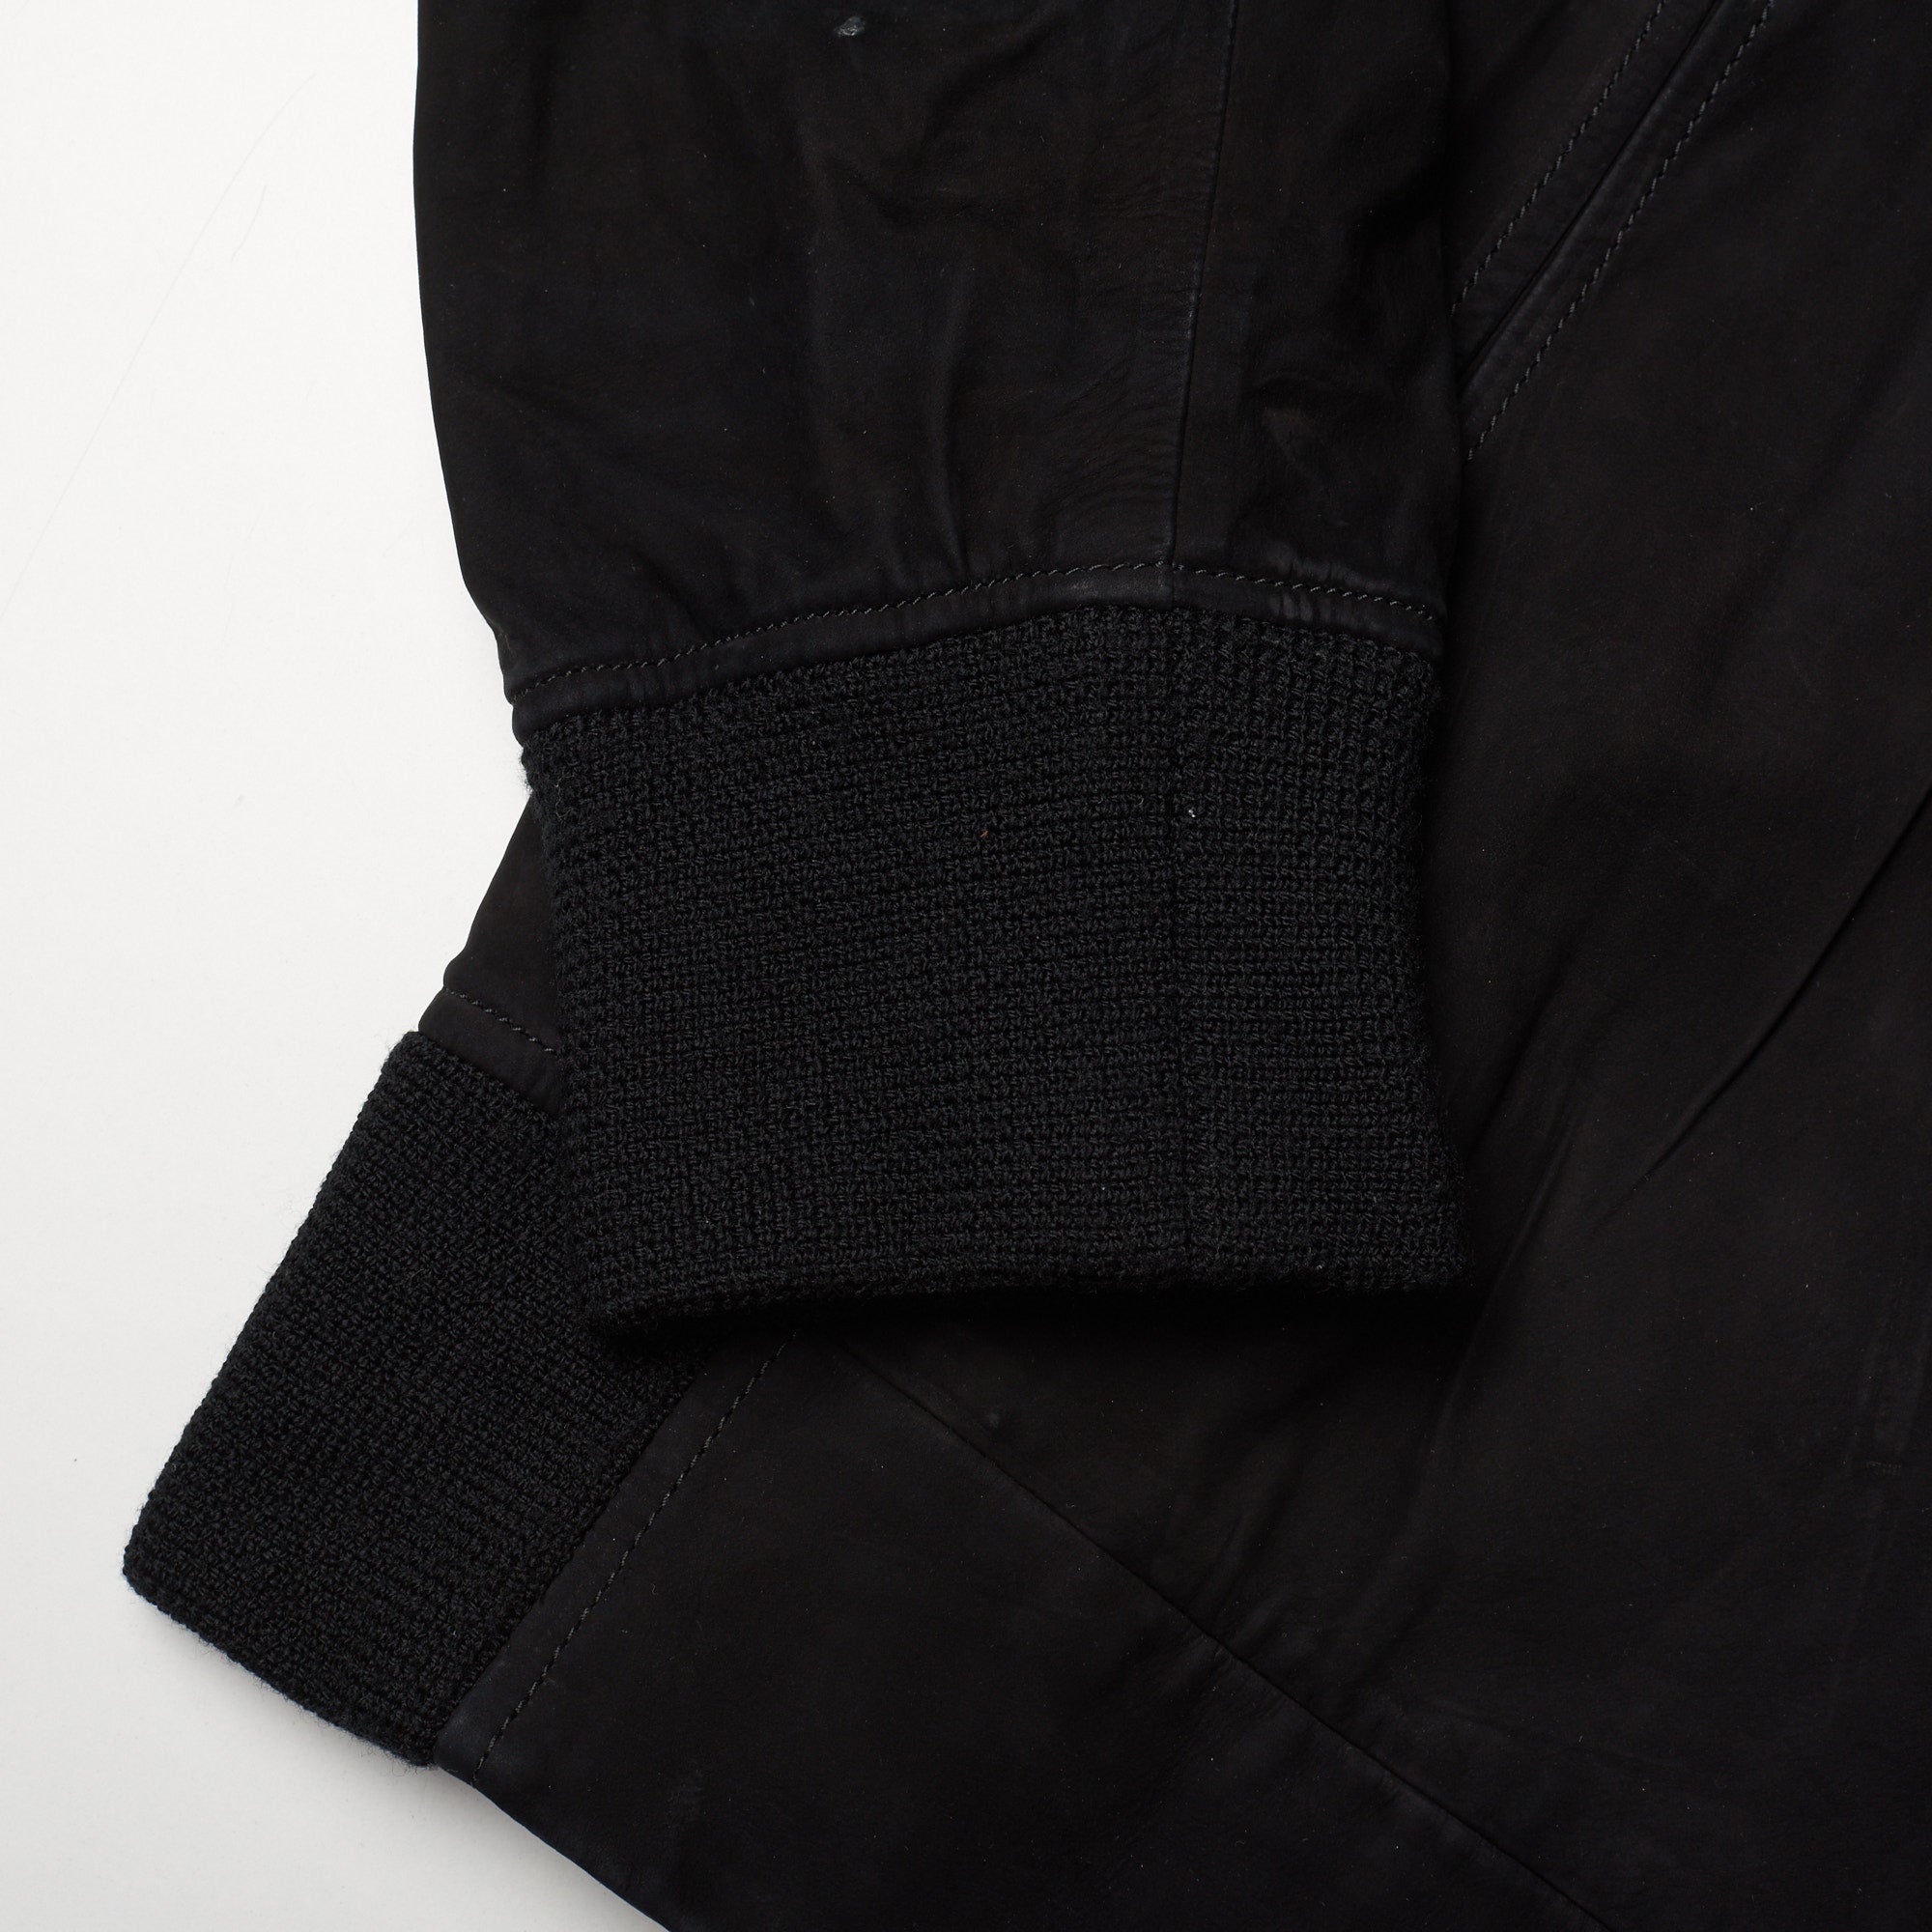 BERLUTI Paris Black Suede Calfskin Leather Removable Hooded Jacket EU 50 US M BERLUTI